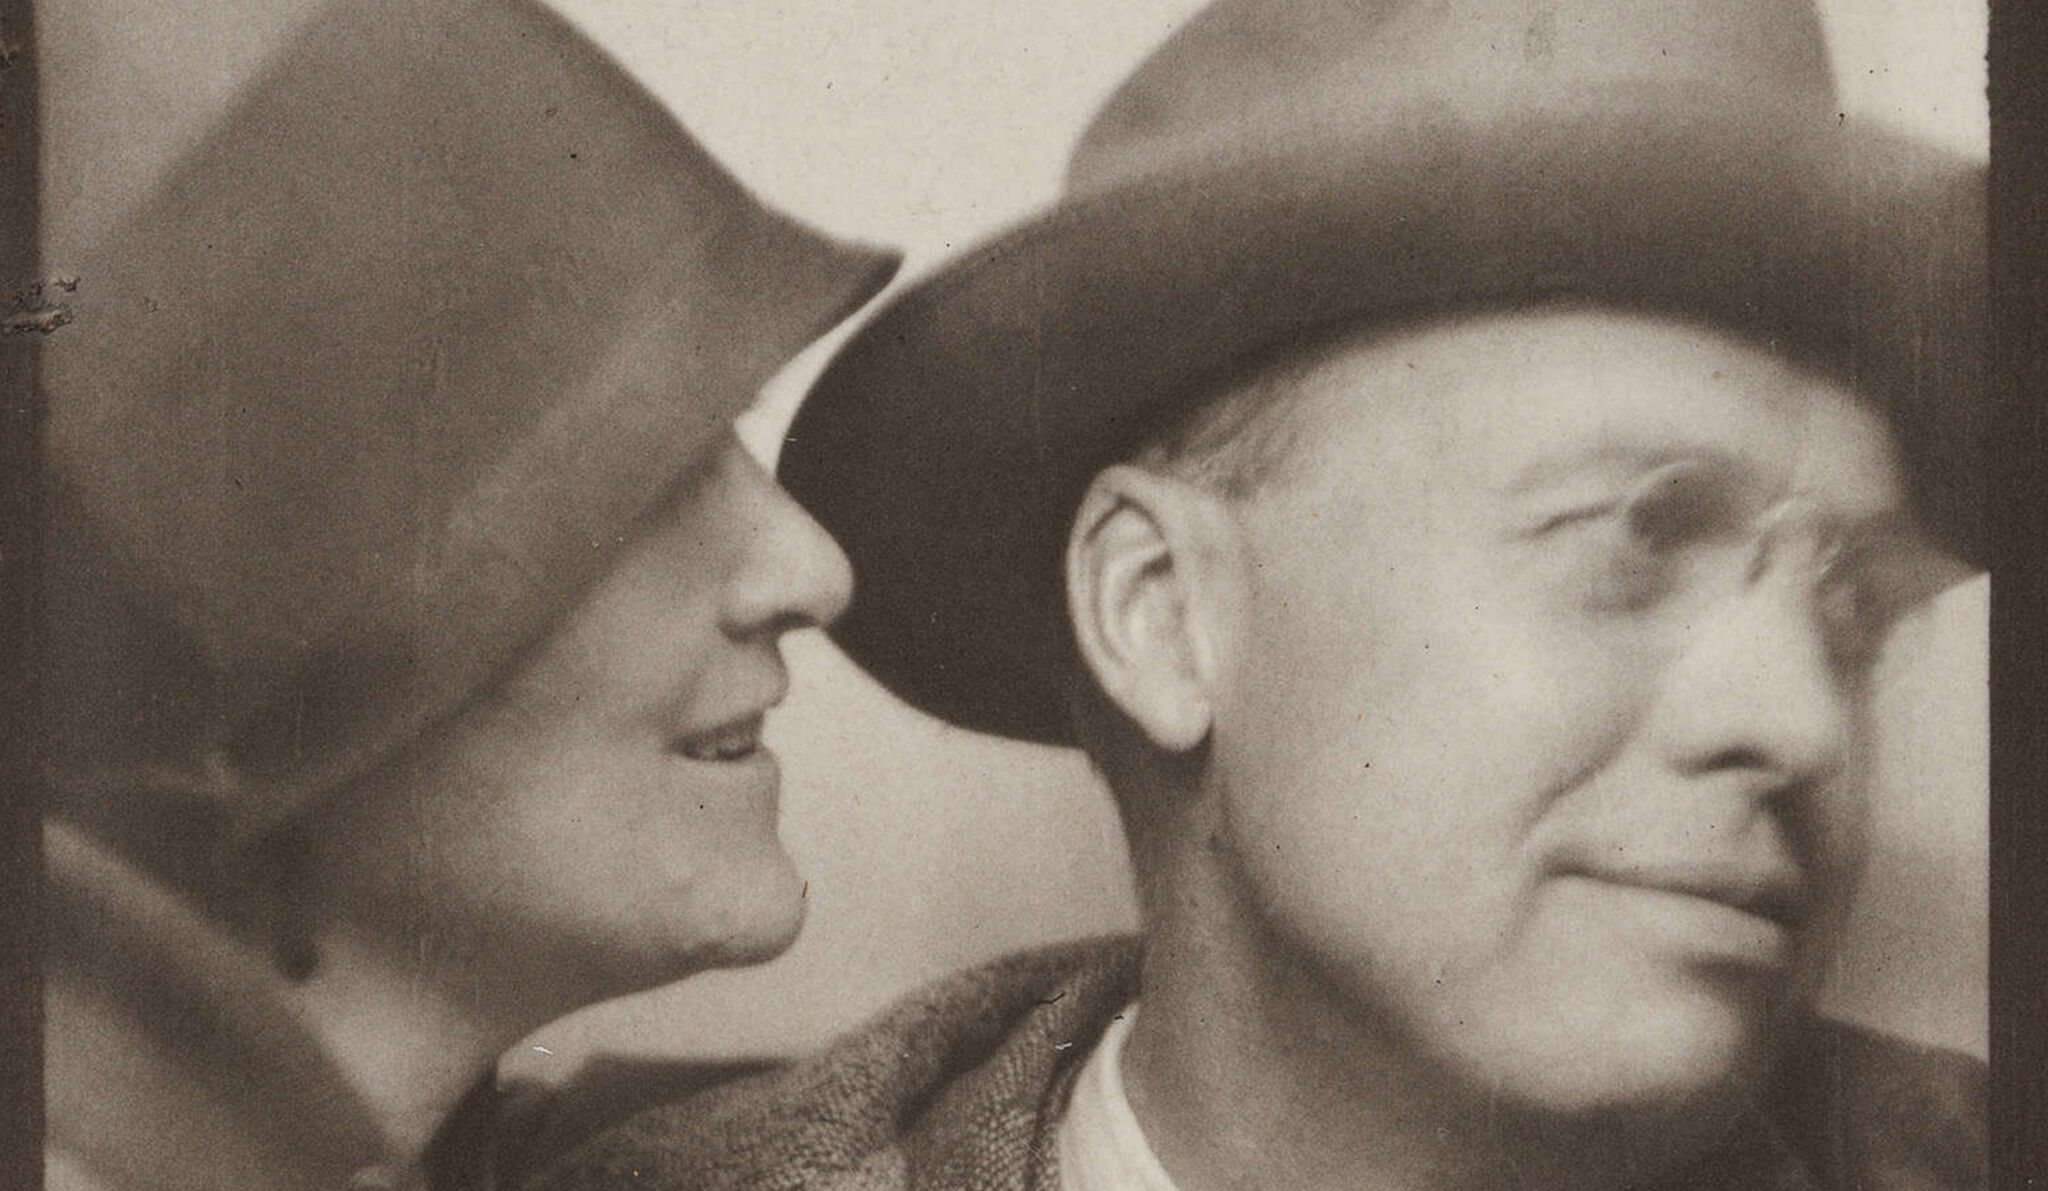 photo booth image of Edward and Josephine Hopper wearing hats. 